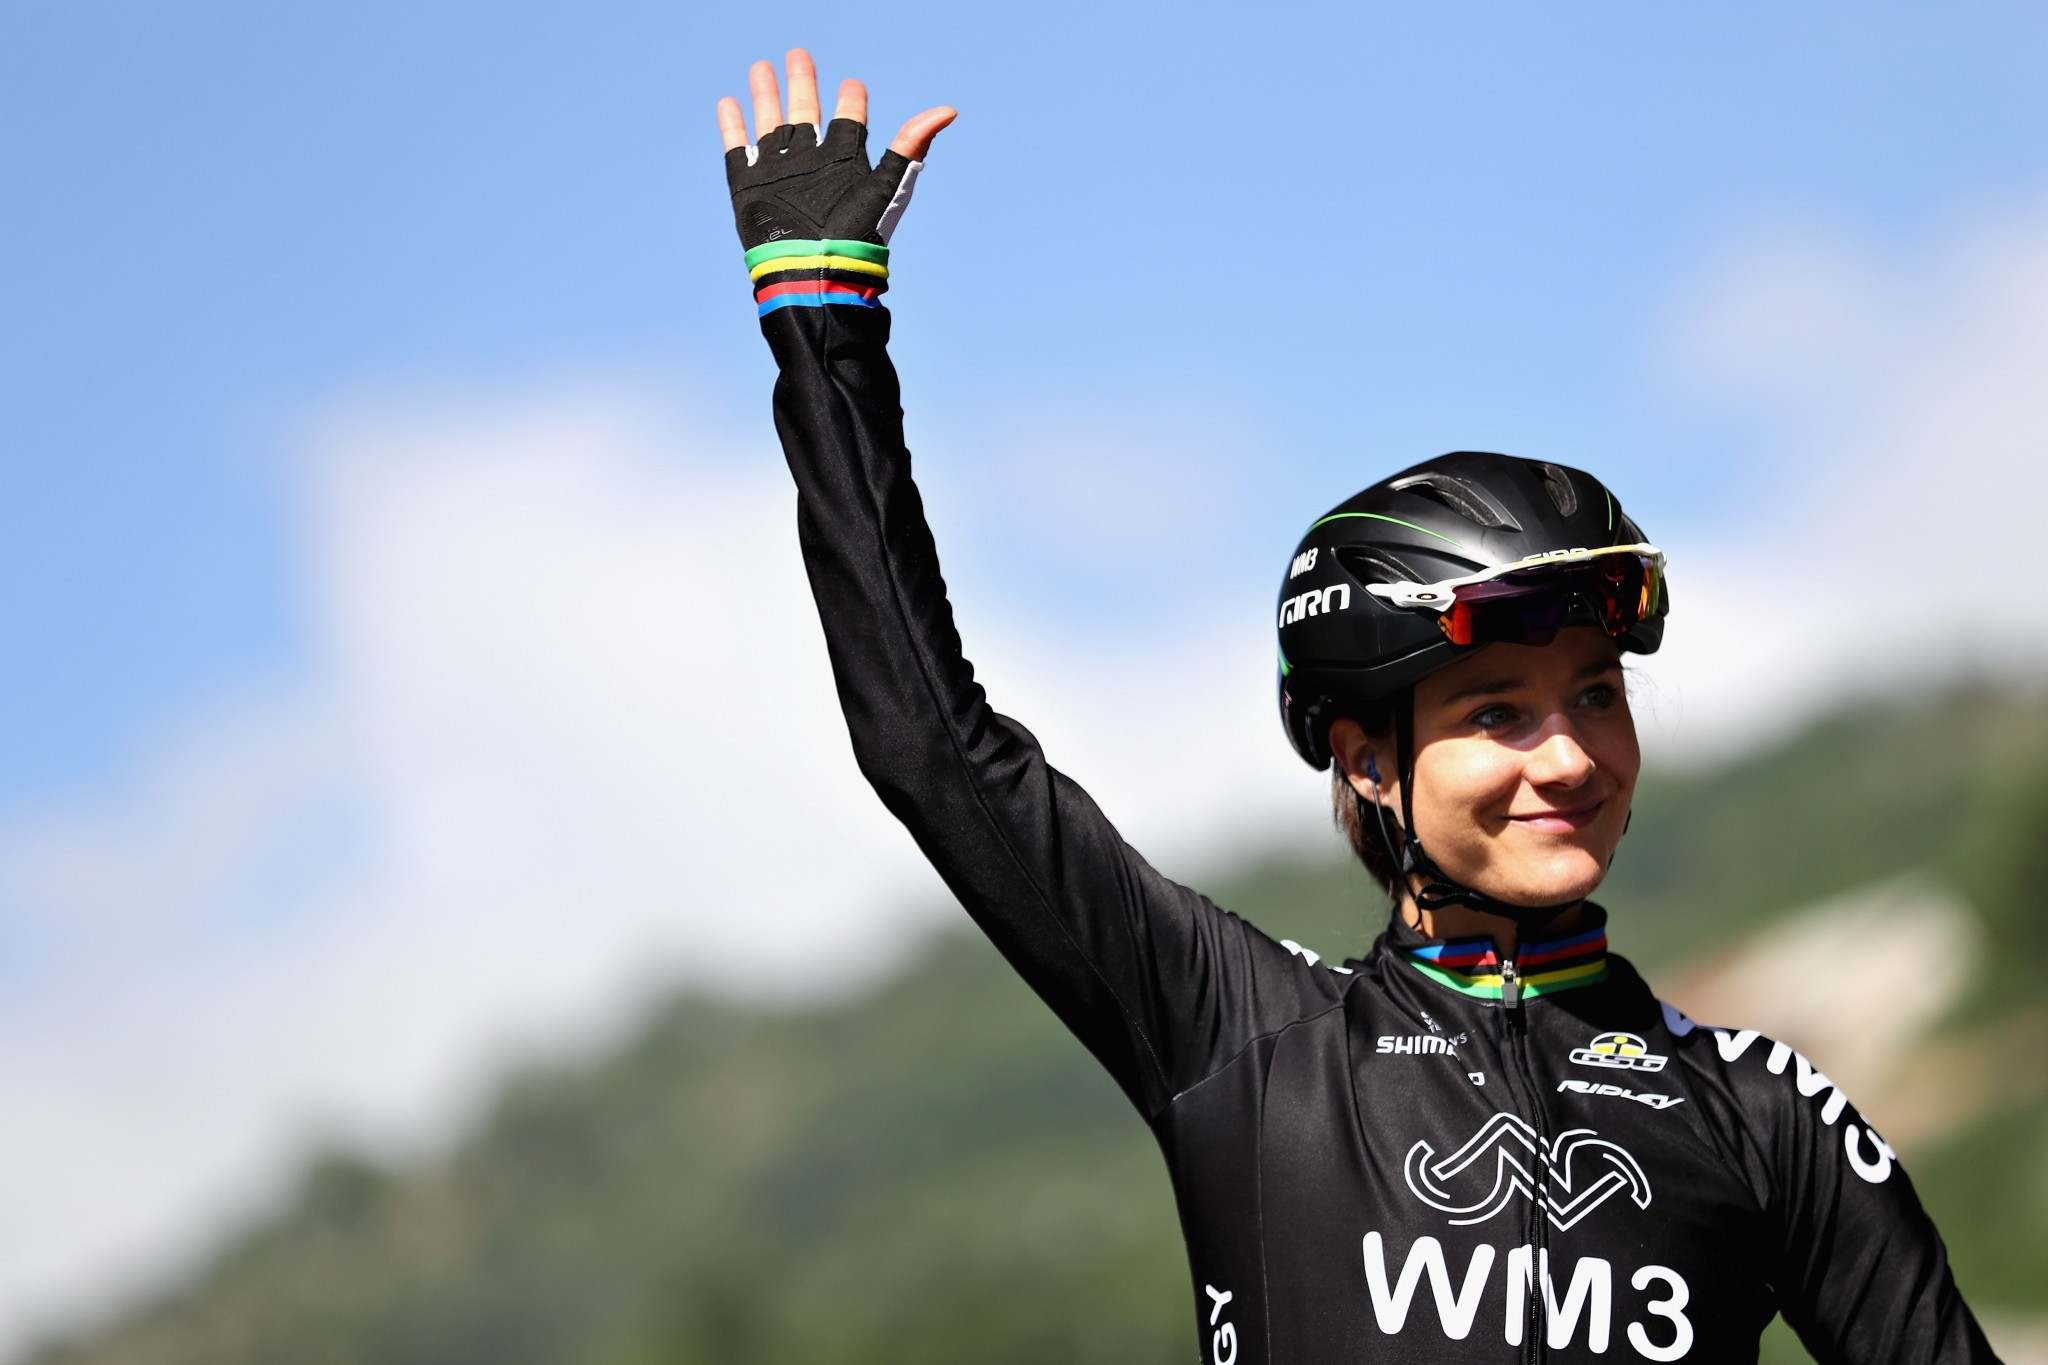 Vos wins steep stage three of Giro Rosa on massive final climb